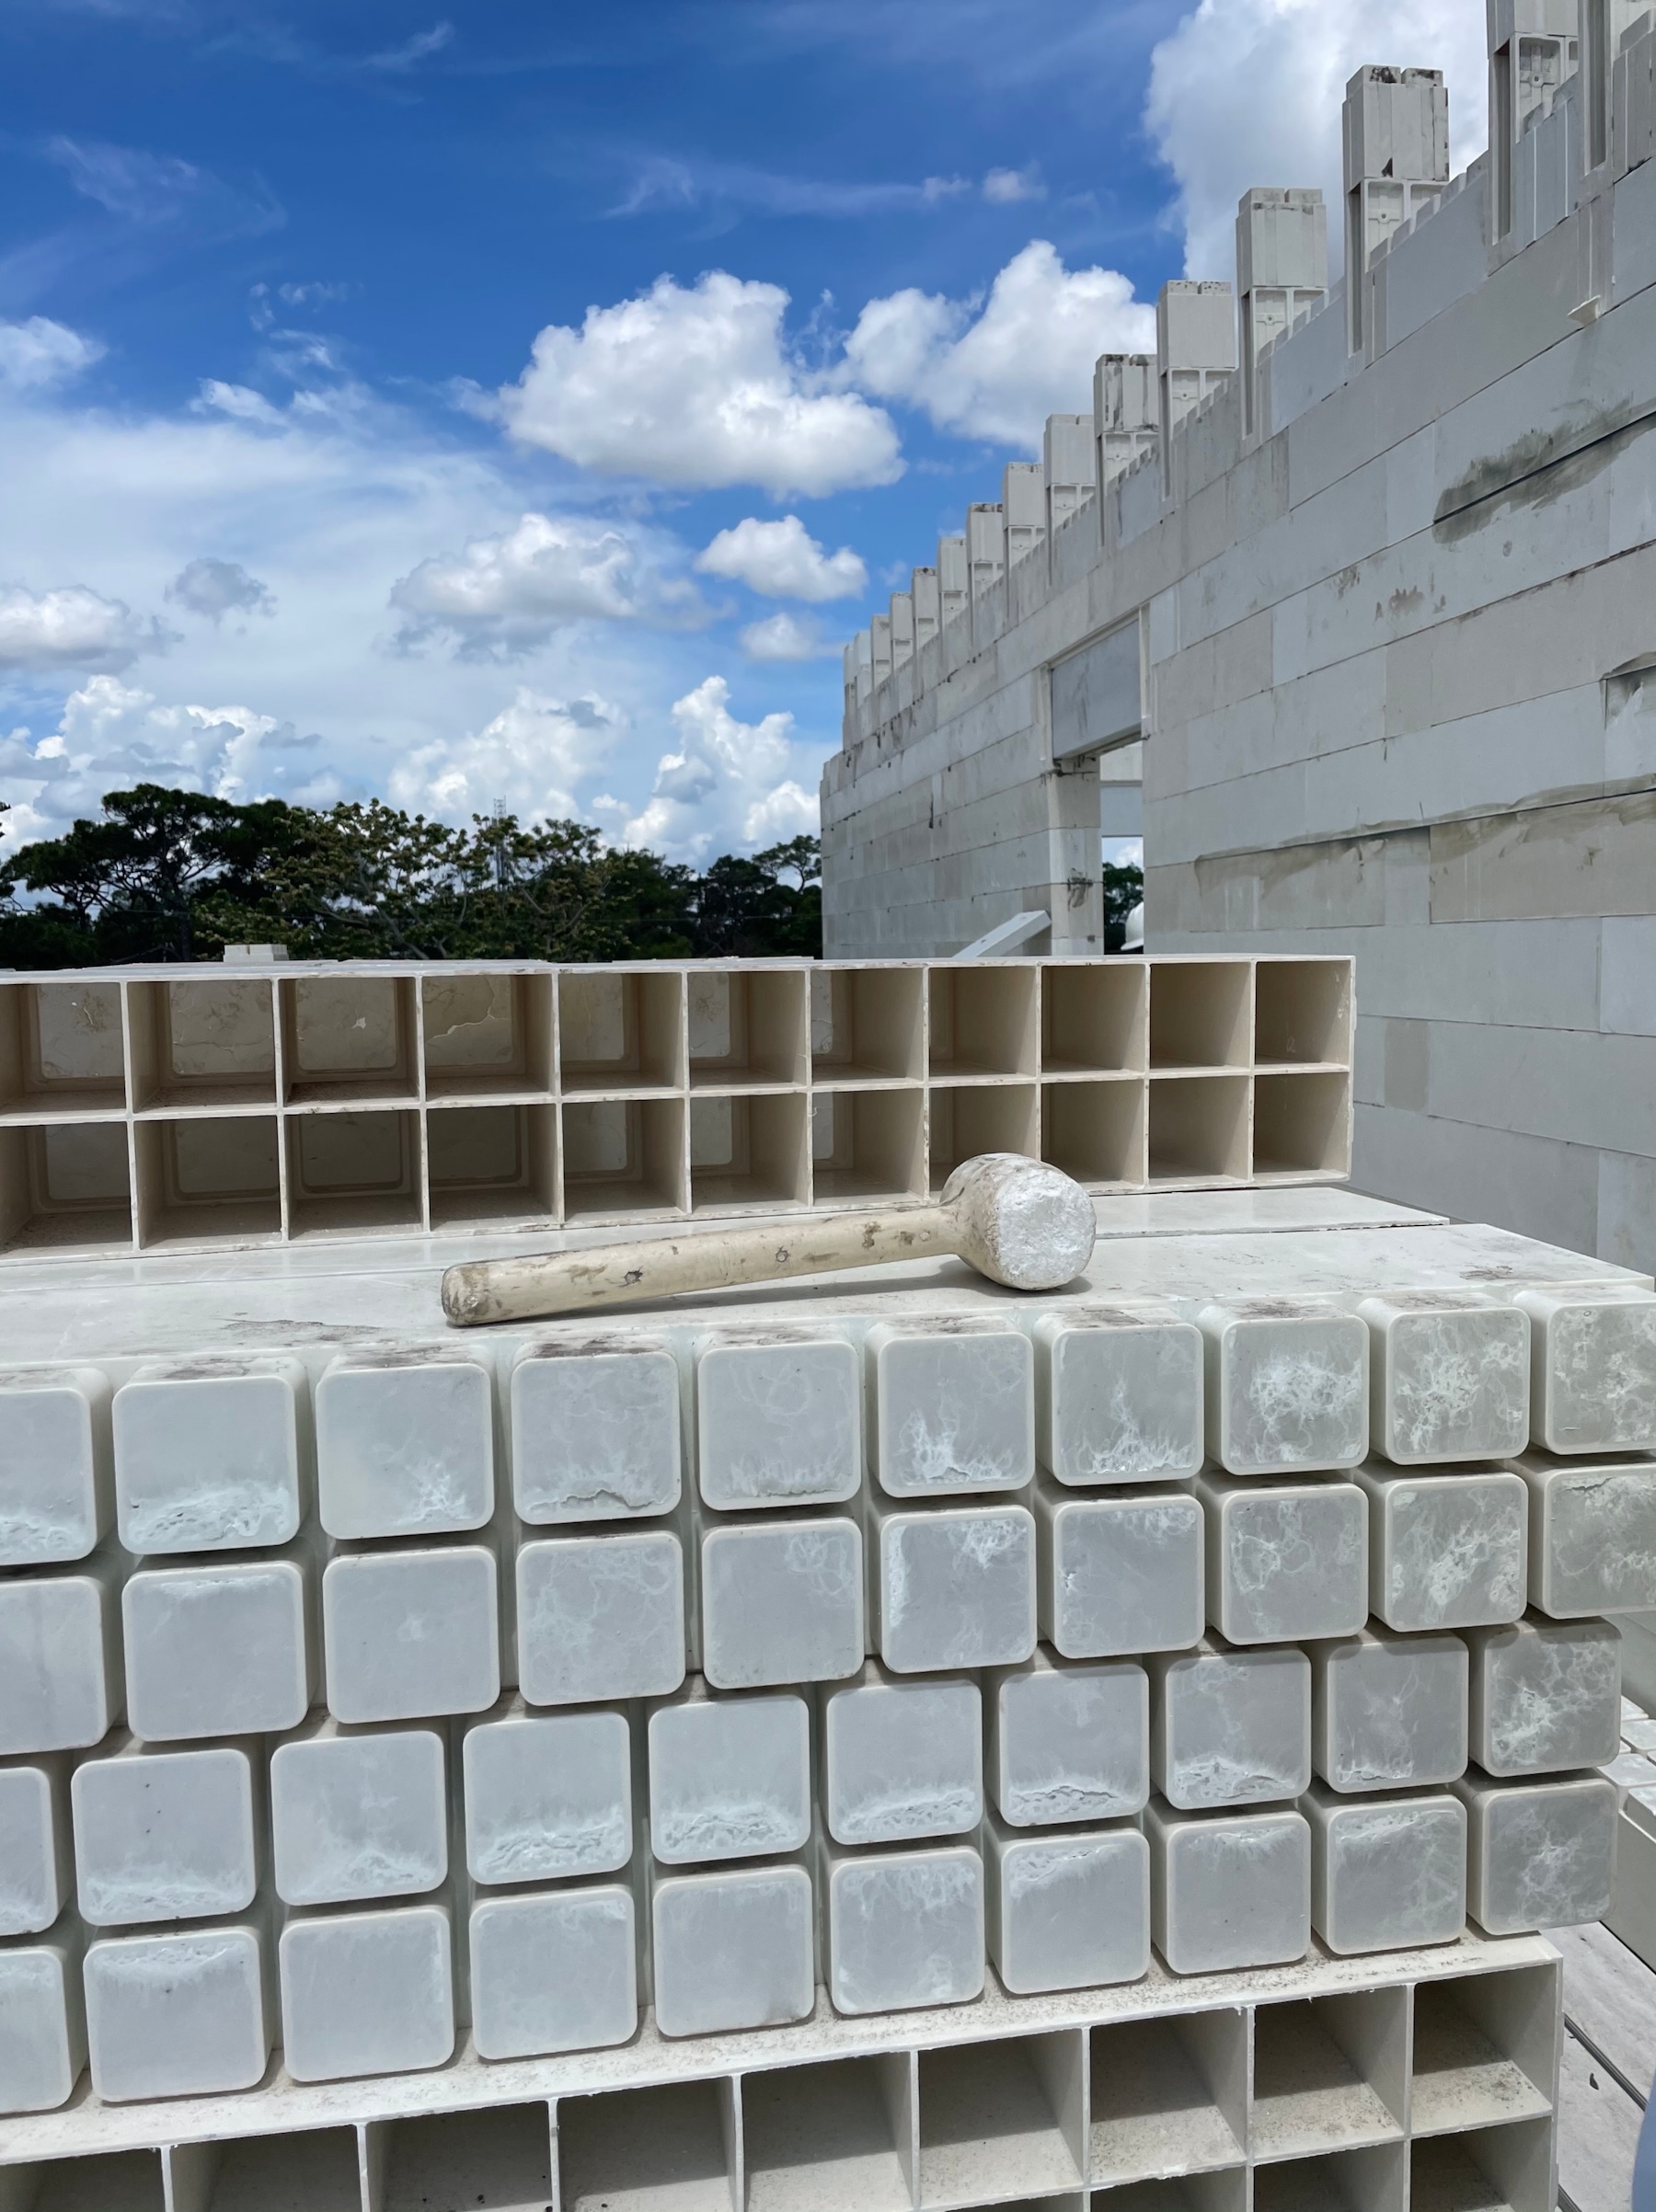 RENCO USA's construction system featuring LEGO-like bricks wins global innovation award